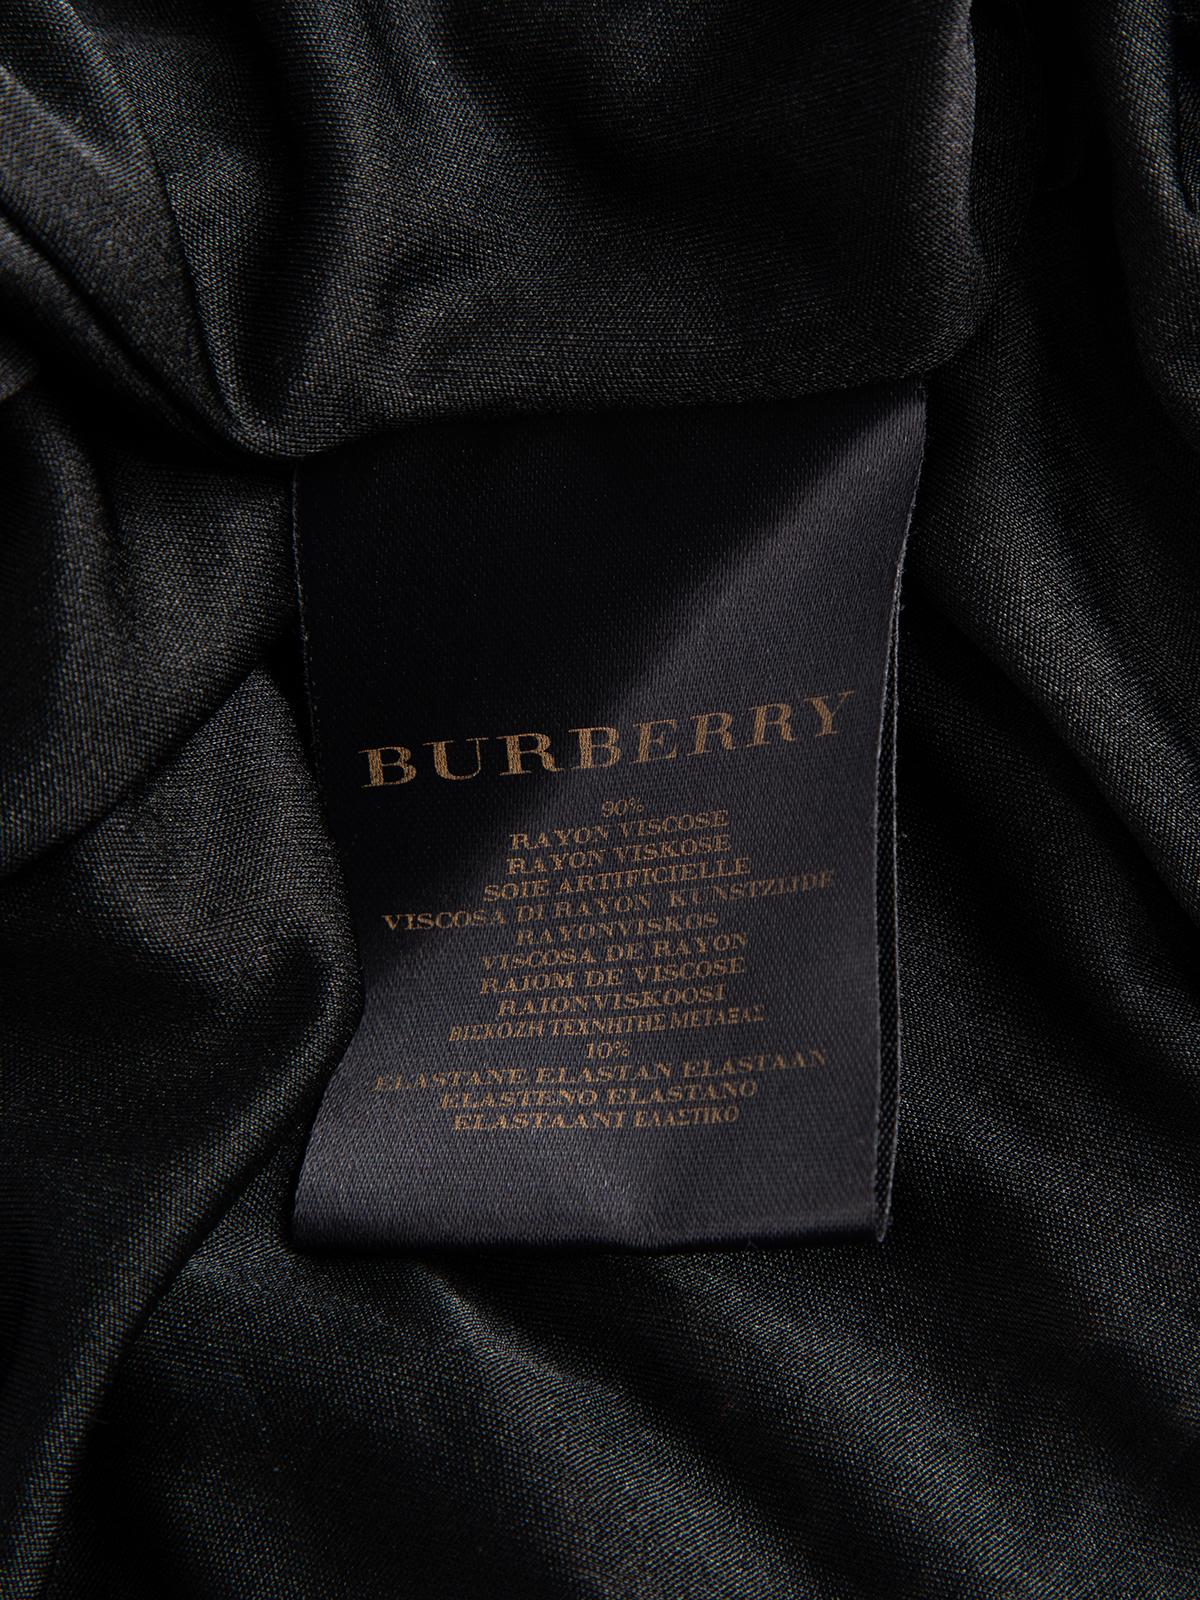 Pre-Loved Burberry Women's Leopard Print Patterned Dress For Sale 3